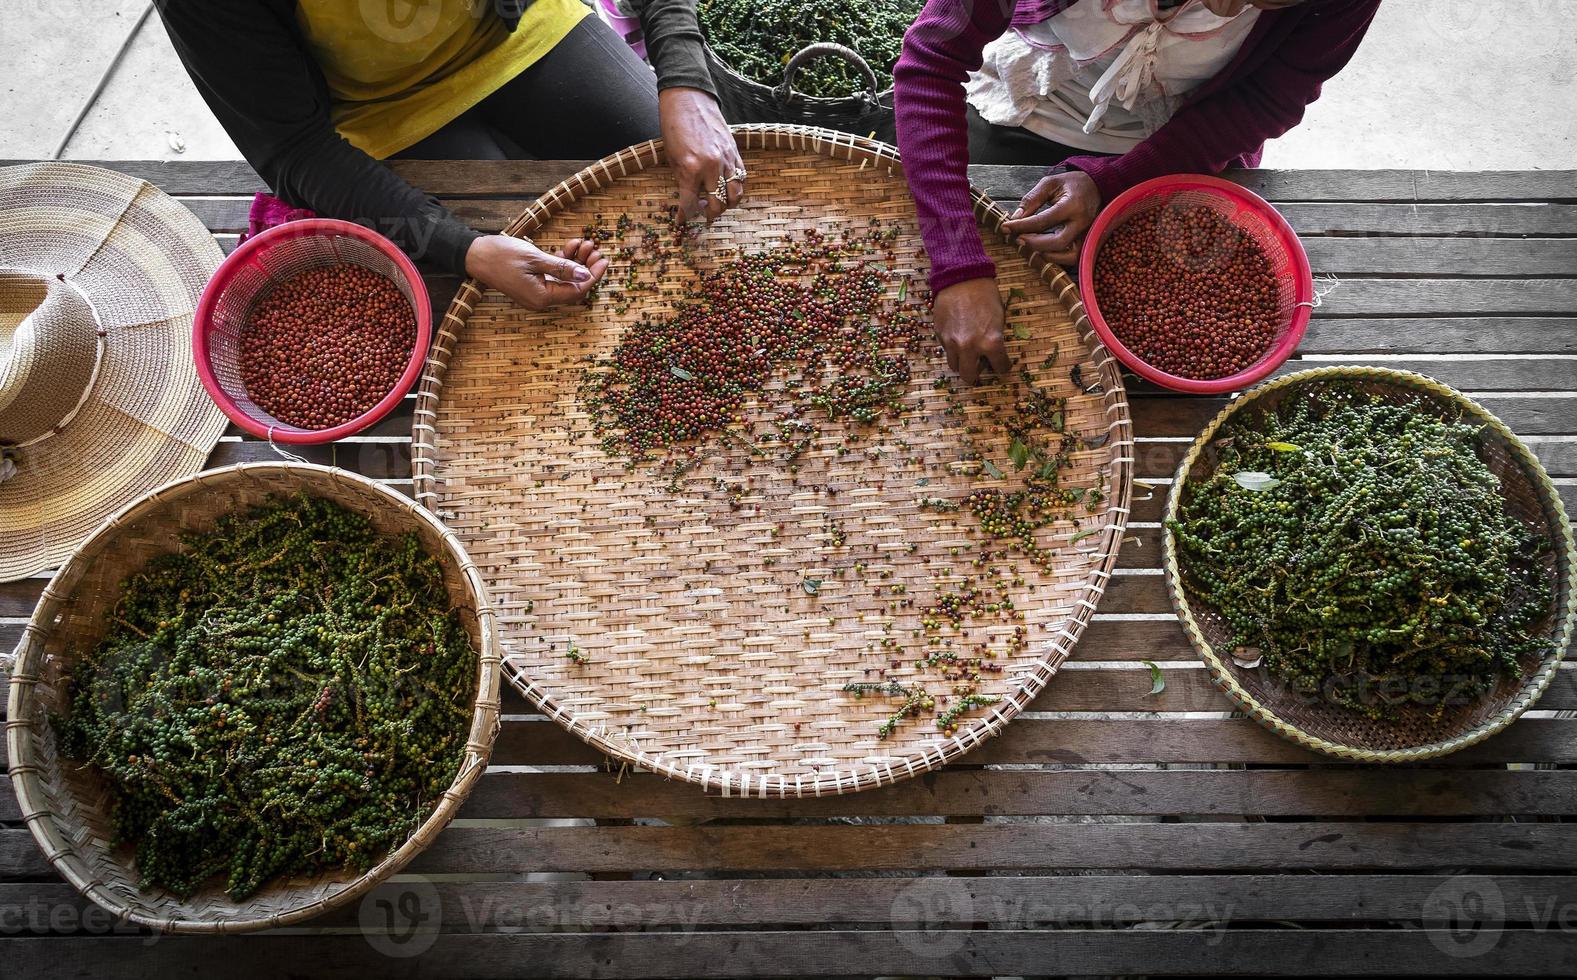 landarbeiders die verse peperpeperkorrels sorteren en selecteren op plantage in kampot cambodja foto